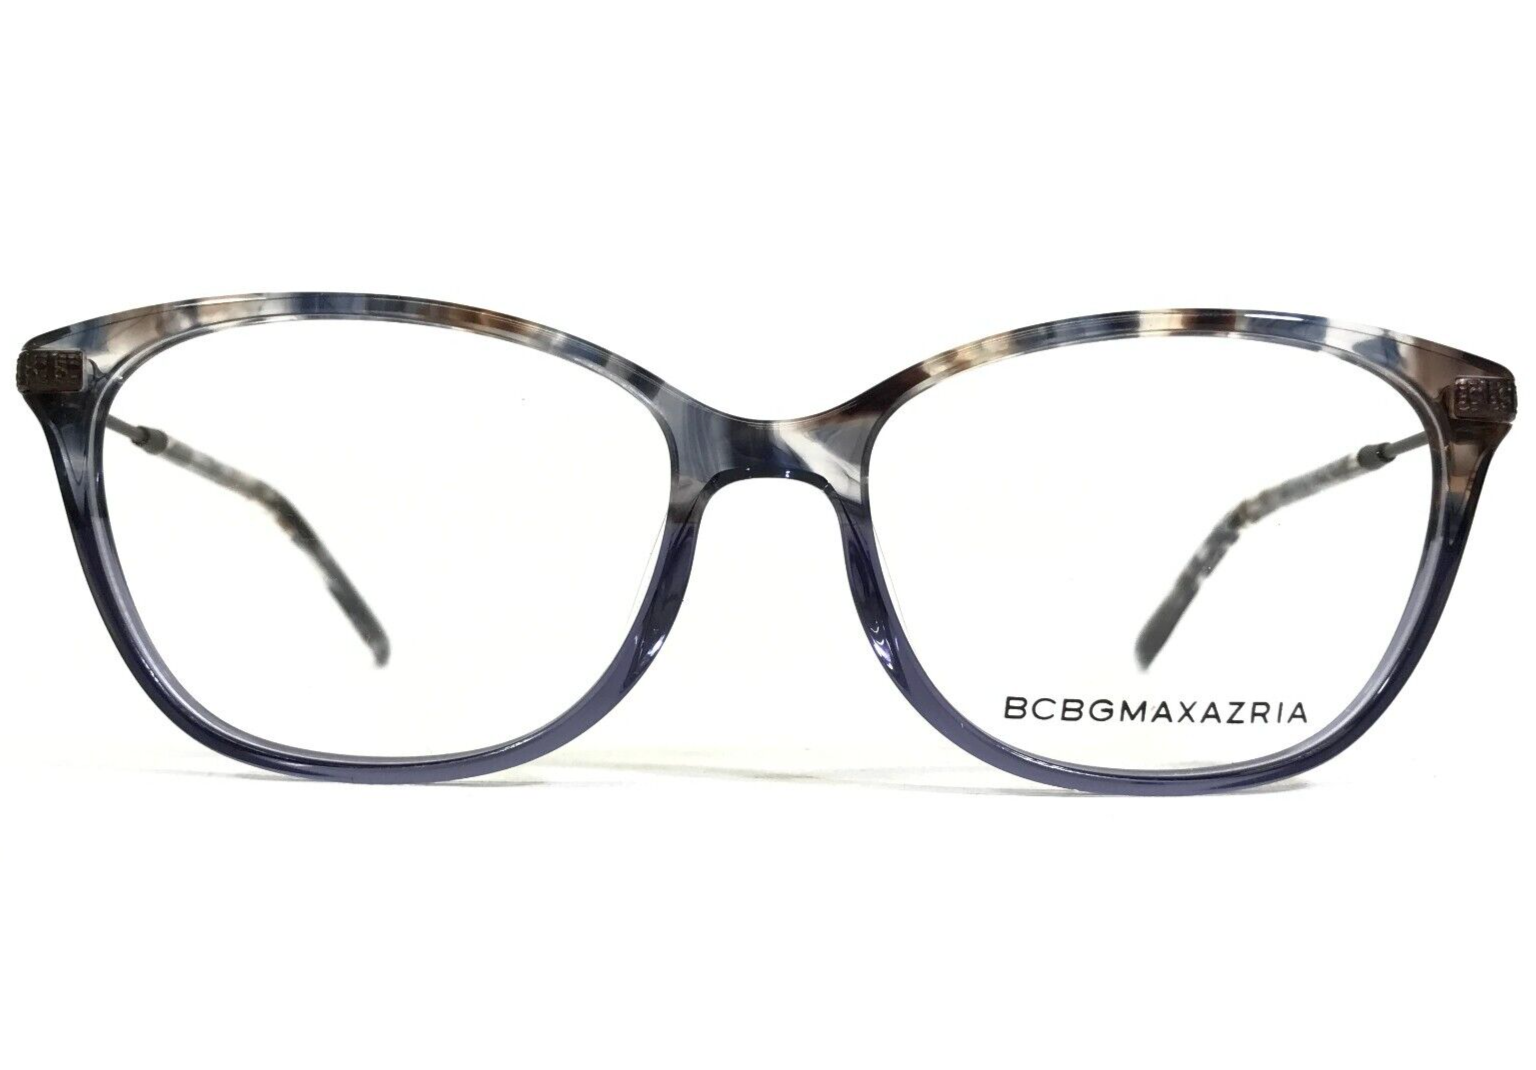 Primary image for BCBGMAXAZRIA Eyeglasses Frames ROWAN BLUE BROWN FADE Marble Cat Eye 54-16-135